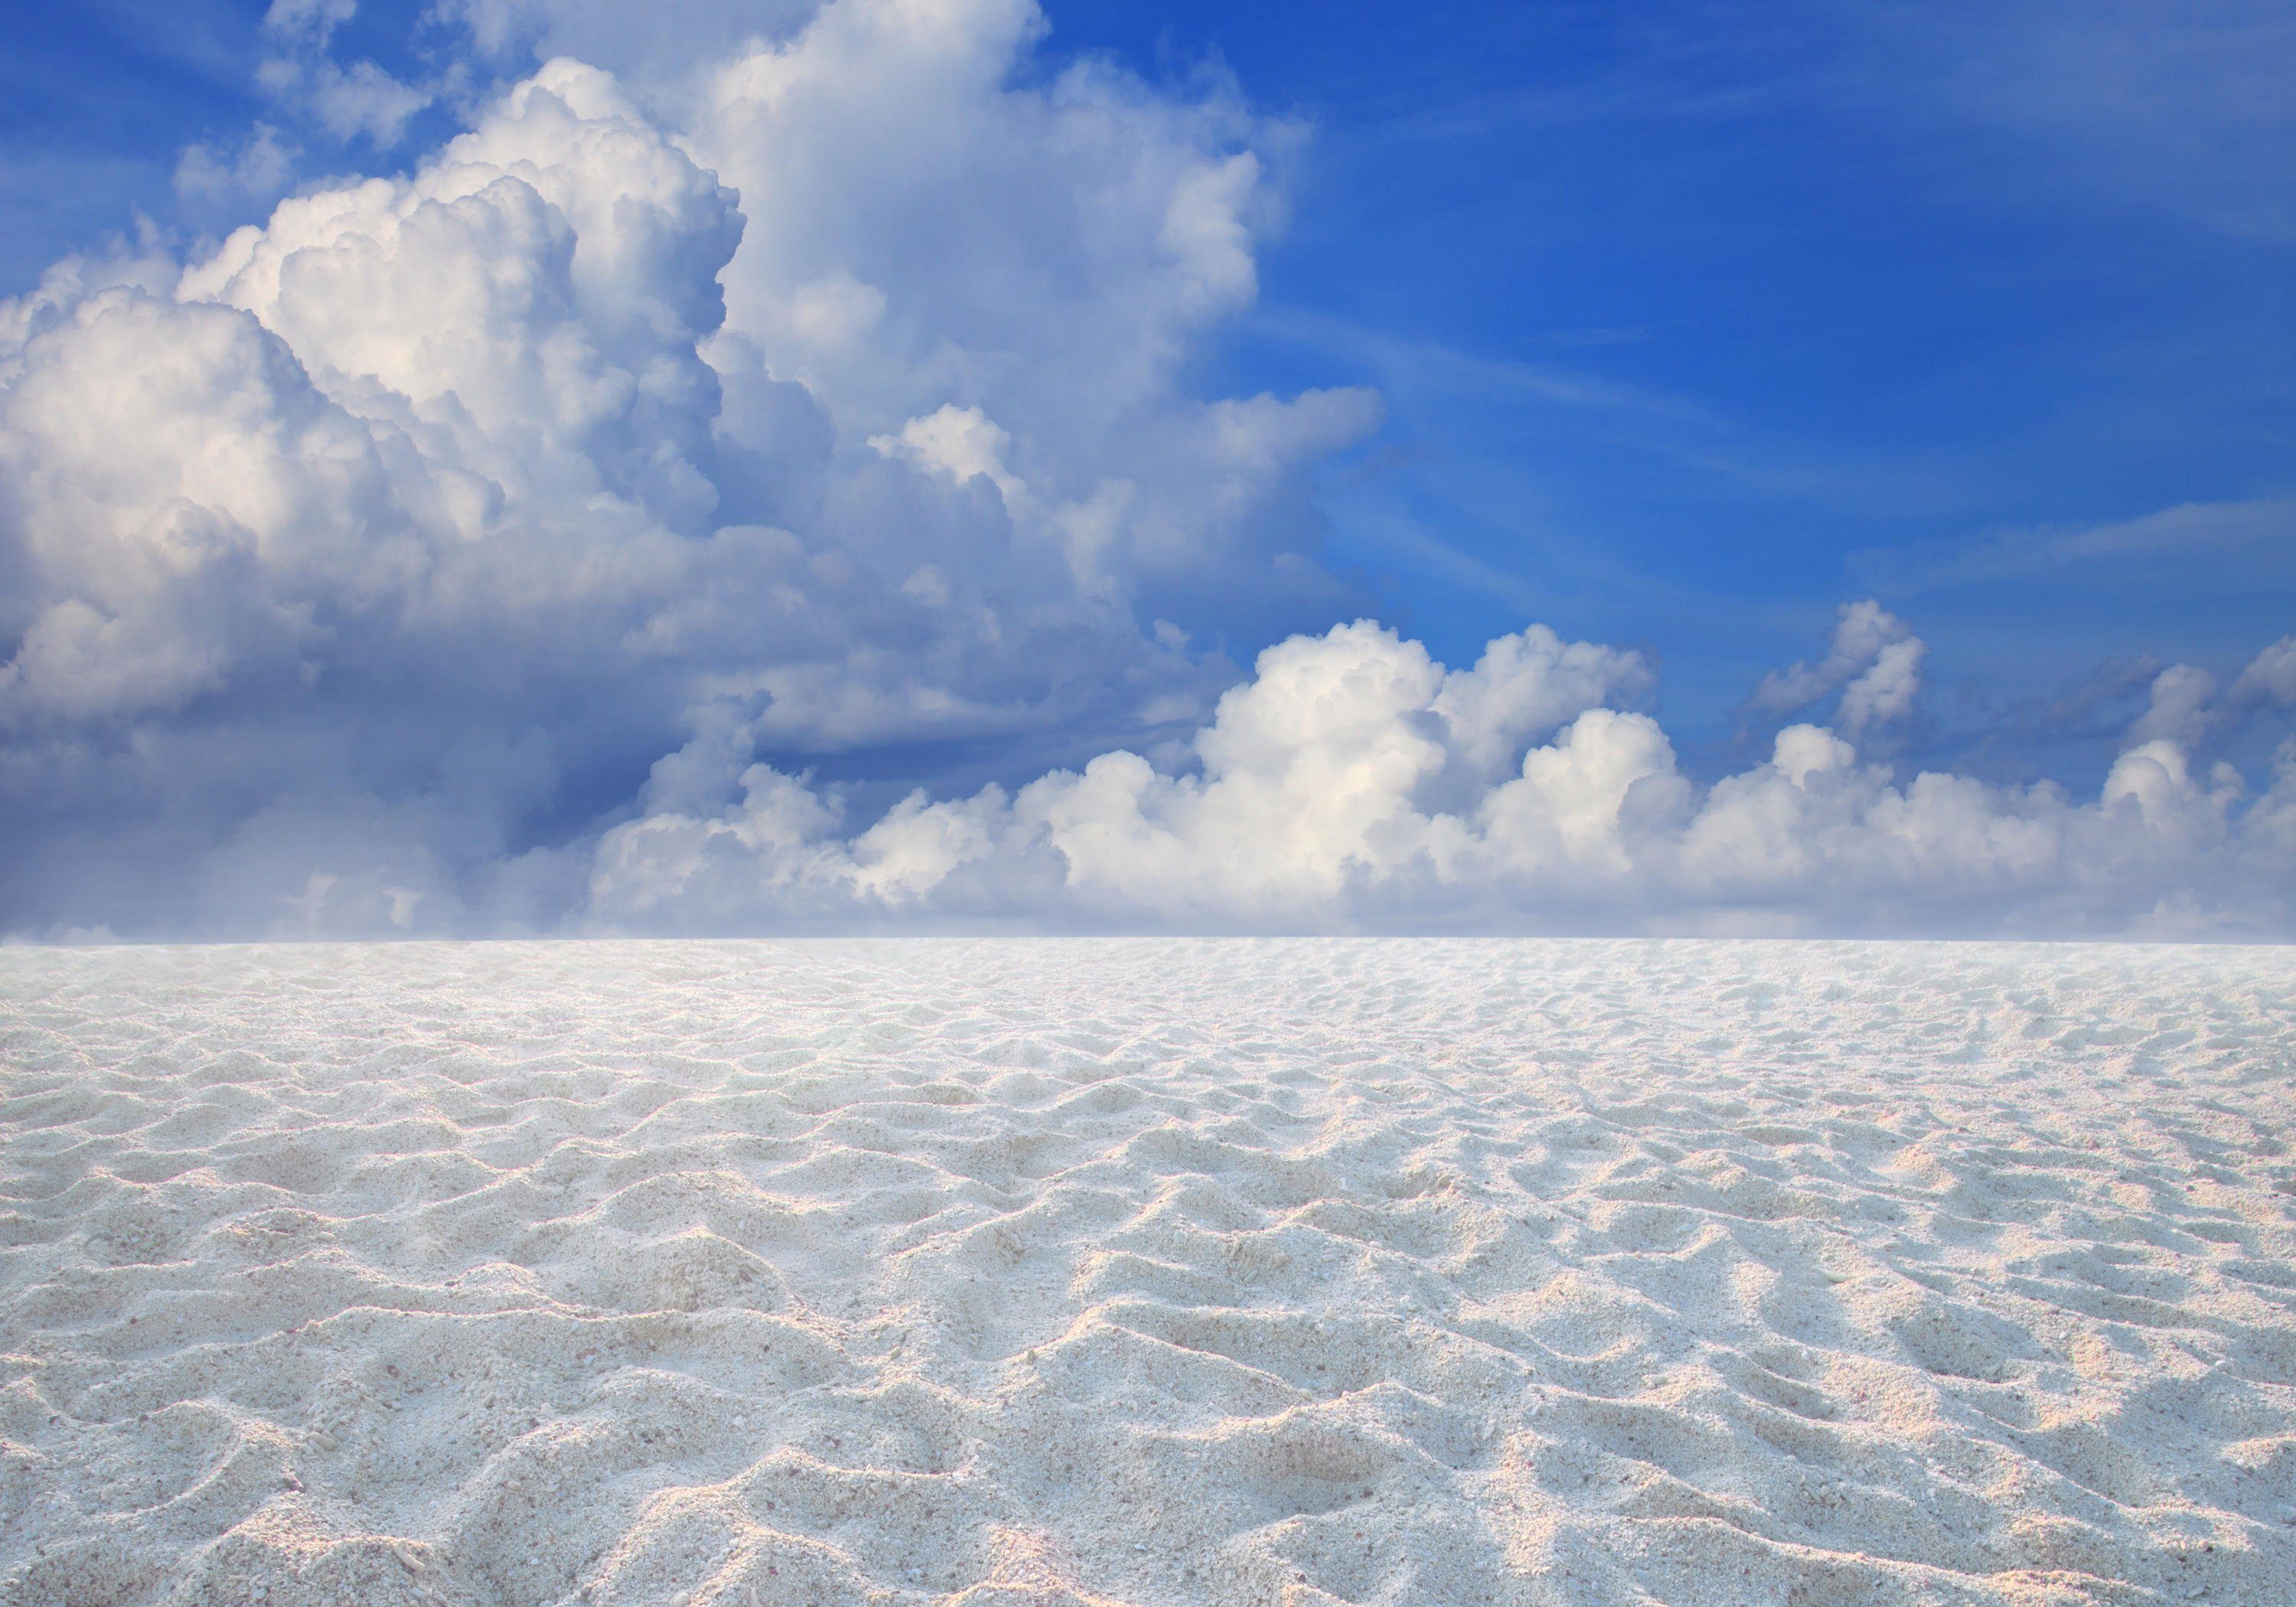 wandmotiv24 Fototapete Sand Landschaft mit blauen Vliestapete Wandtapete, matt, glatt, Motivtapete, Himmel, einem